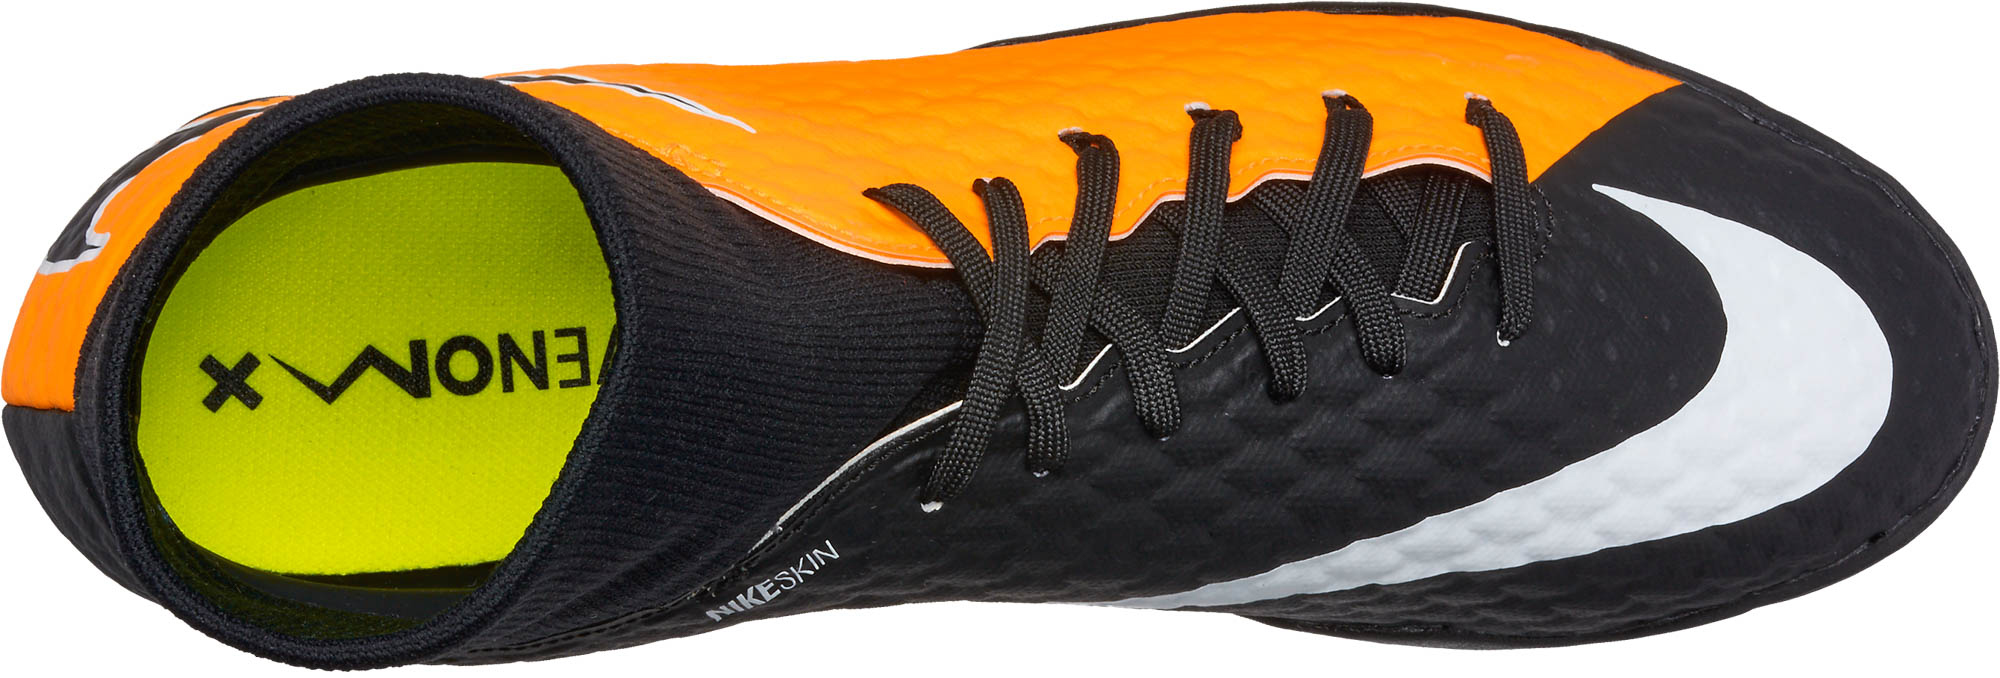 Nike HyperVenom Transform Football Boots SoccerBible